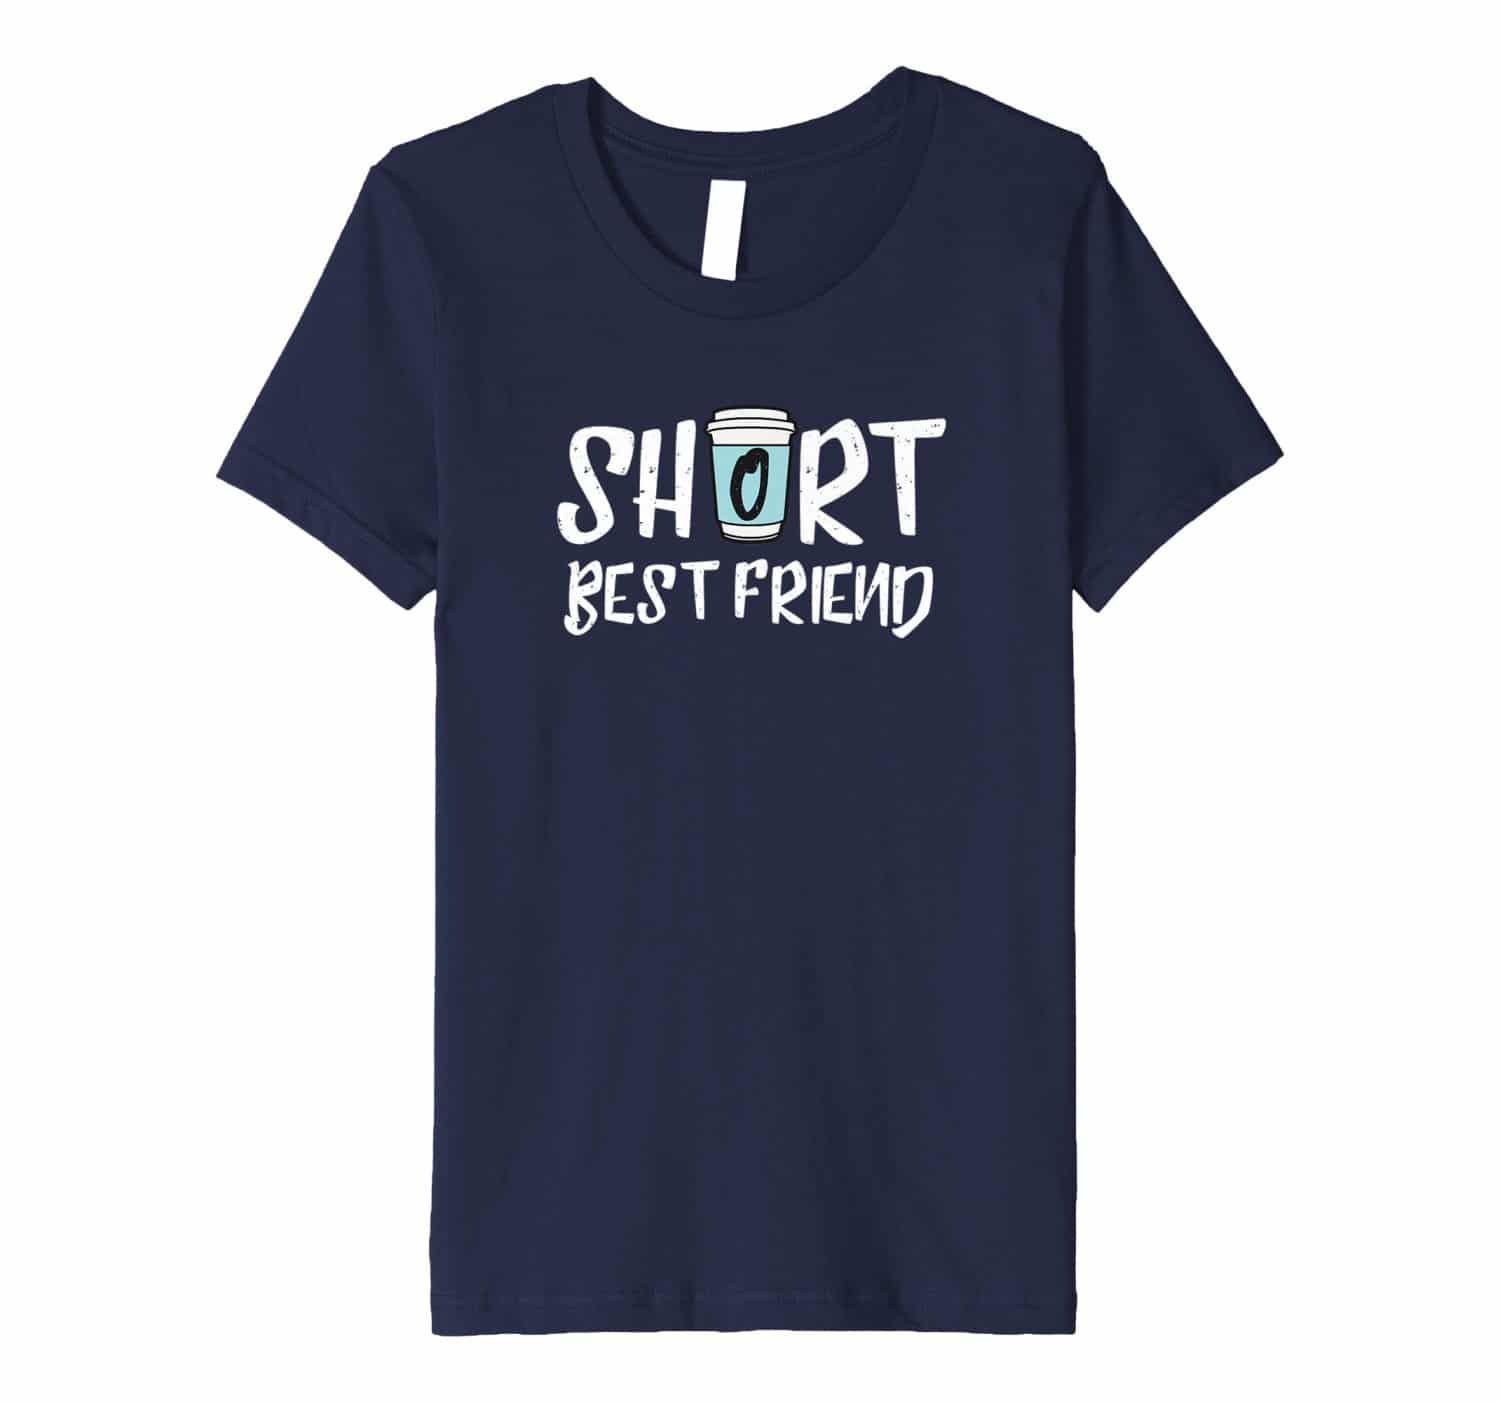 Funny Best Friend Shirts 2018: The Short Friend T-Shirt